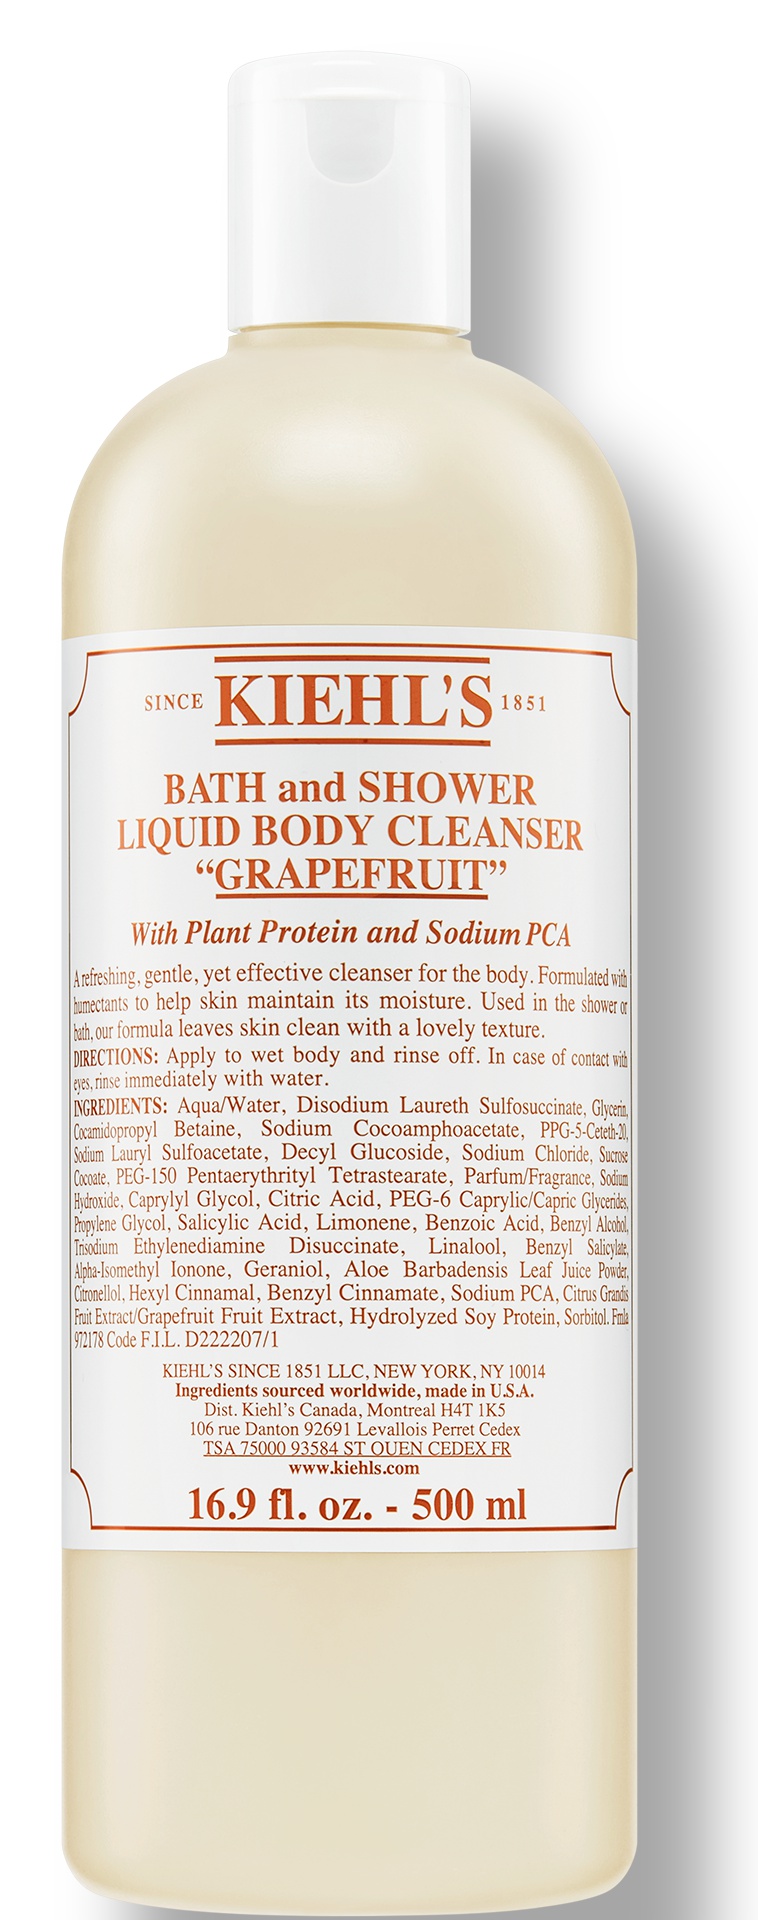 Kiehl’s Bath And Shower Liquid Body Cleanser "Grapefruit"